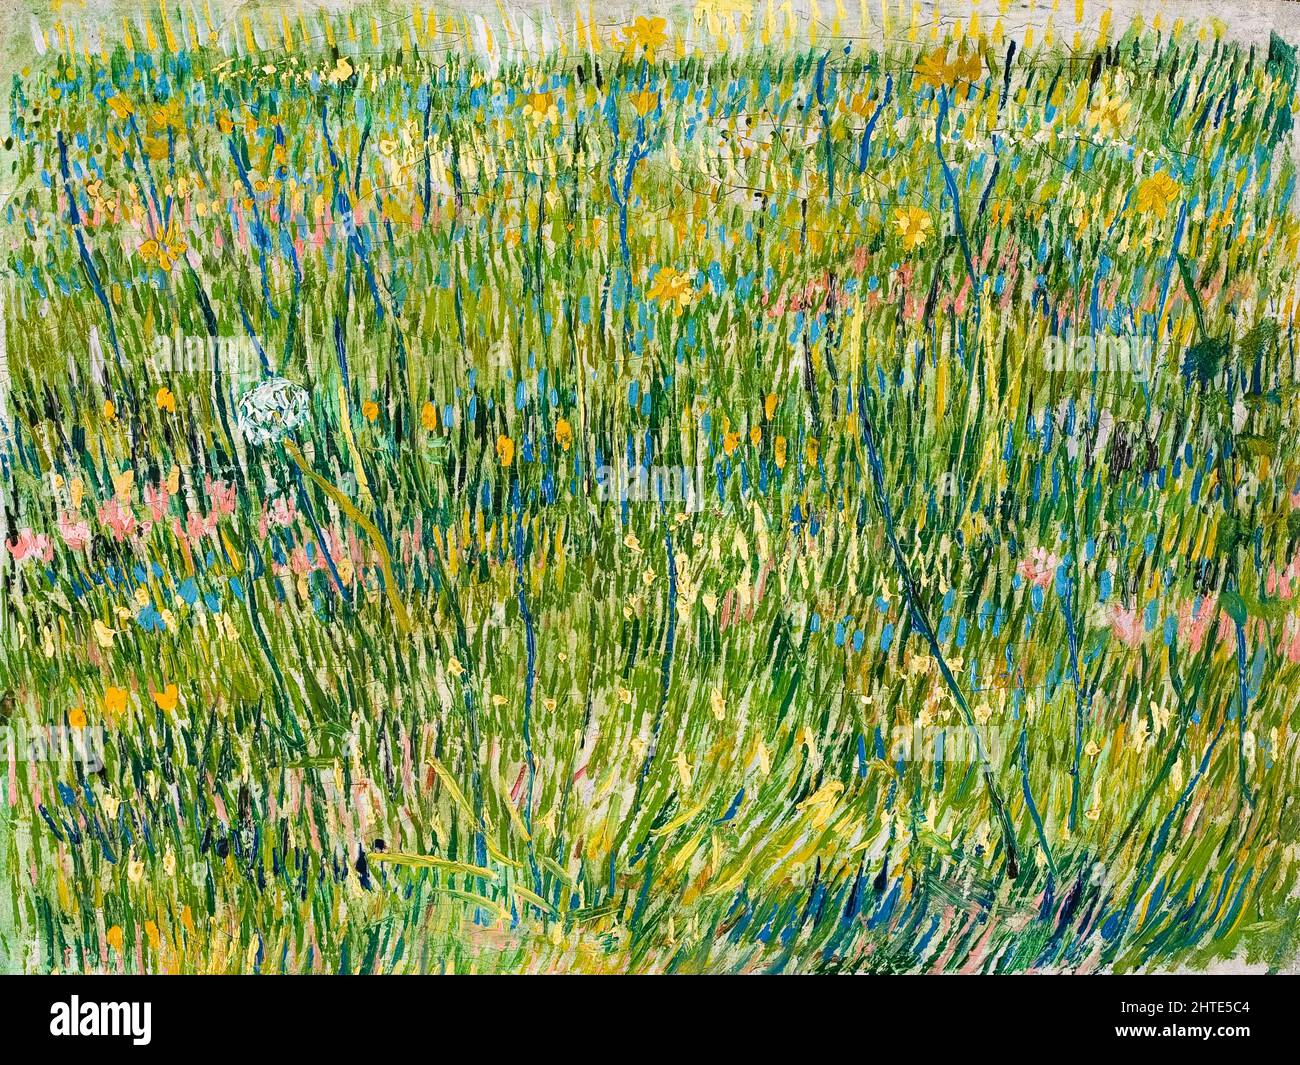 Vincent van Gogh, parche de hierba, pintura, óleo sobre lienzo, 1887 Foto de stock